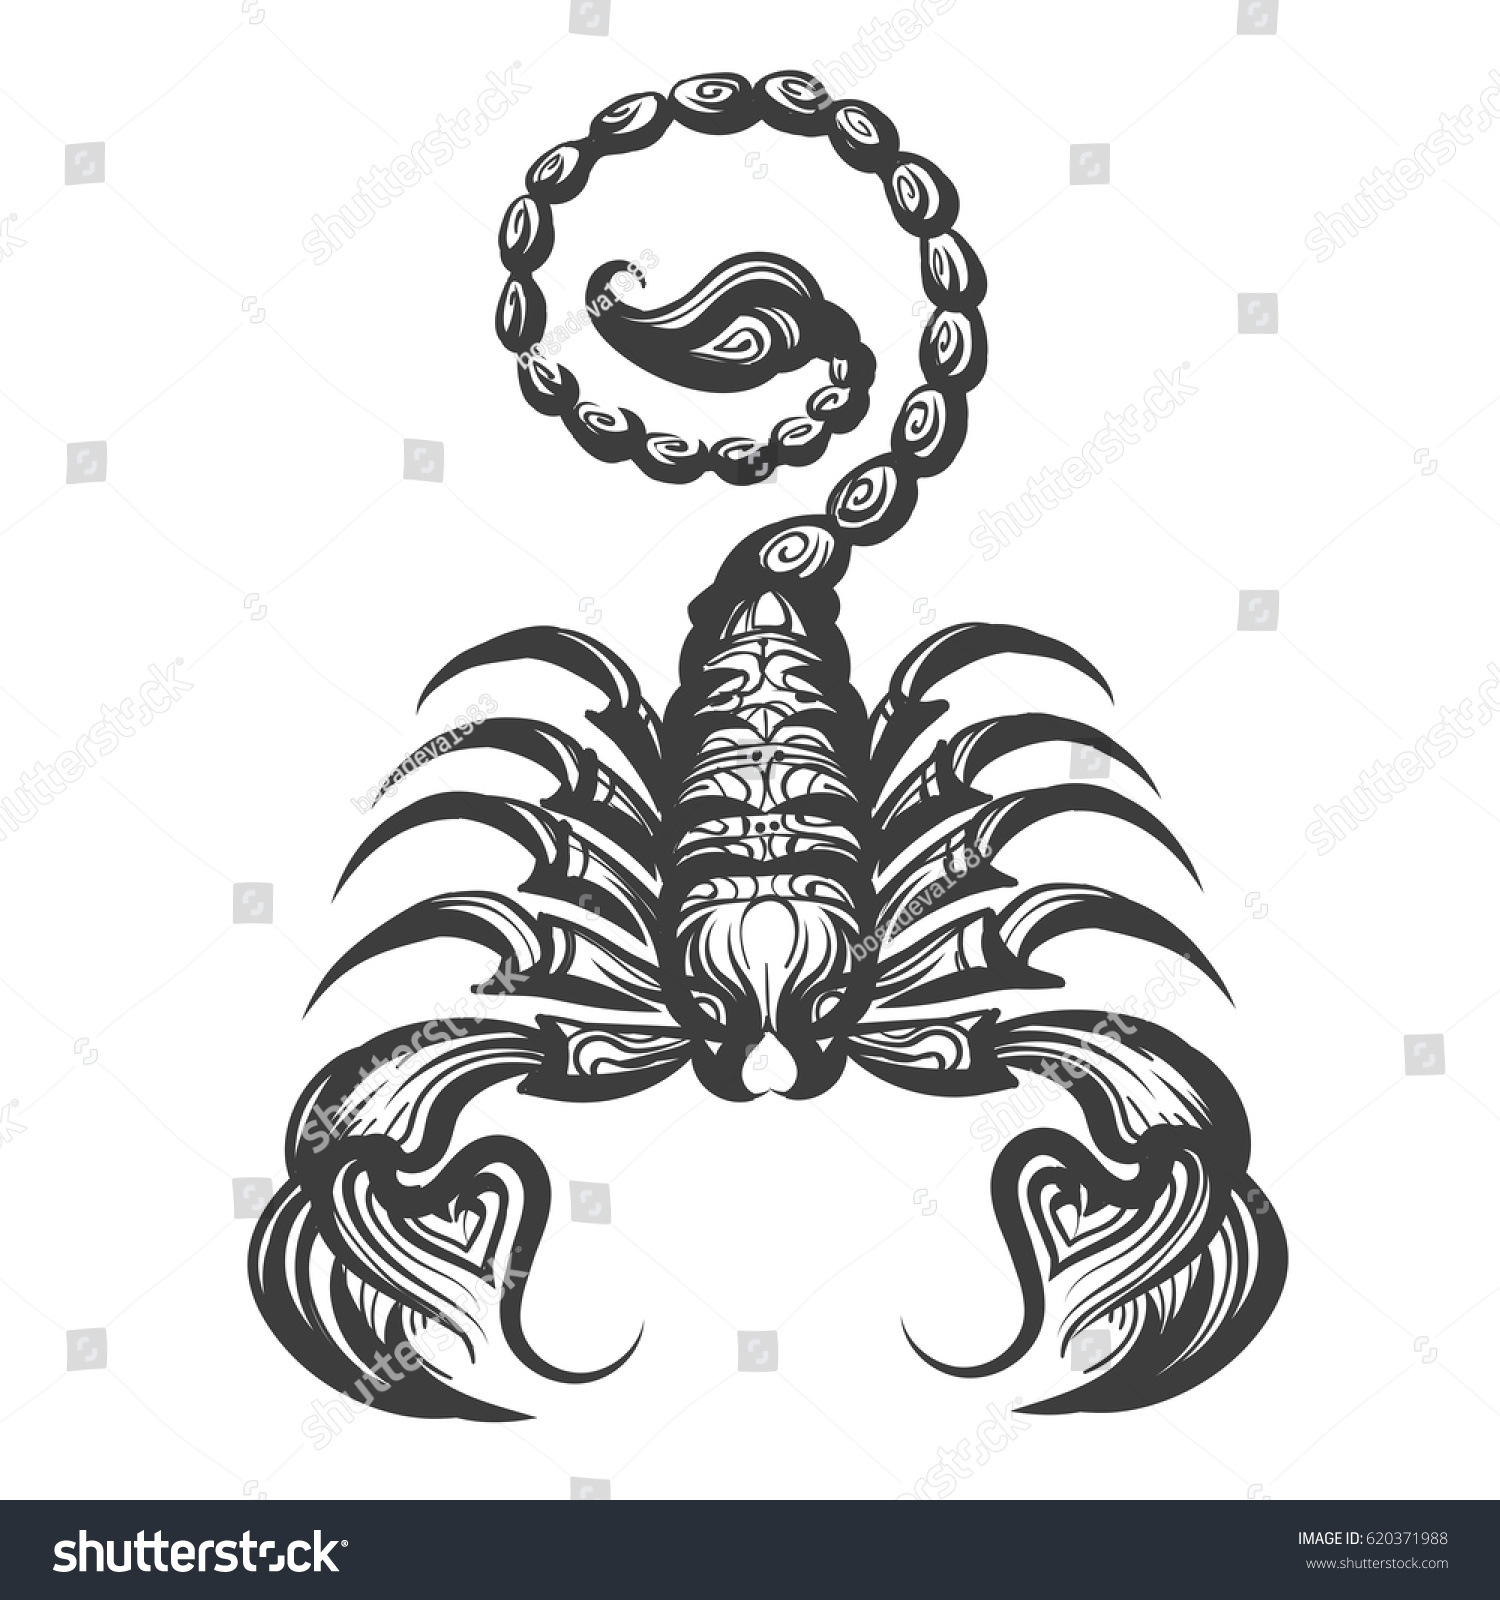 Scorpion Drawn Engraving Style Vector Illustration Stock Vector ...